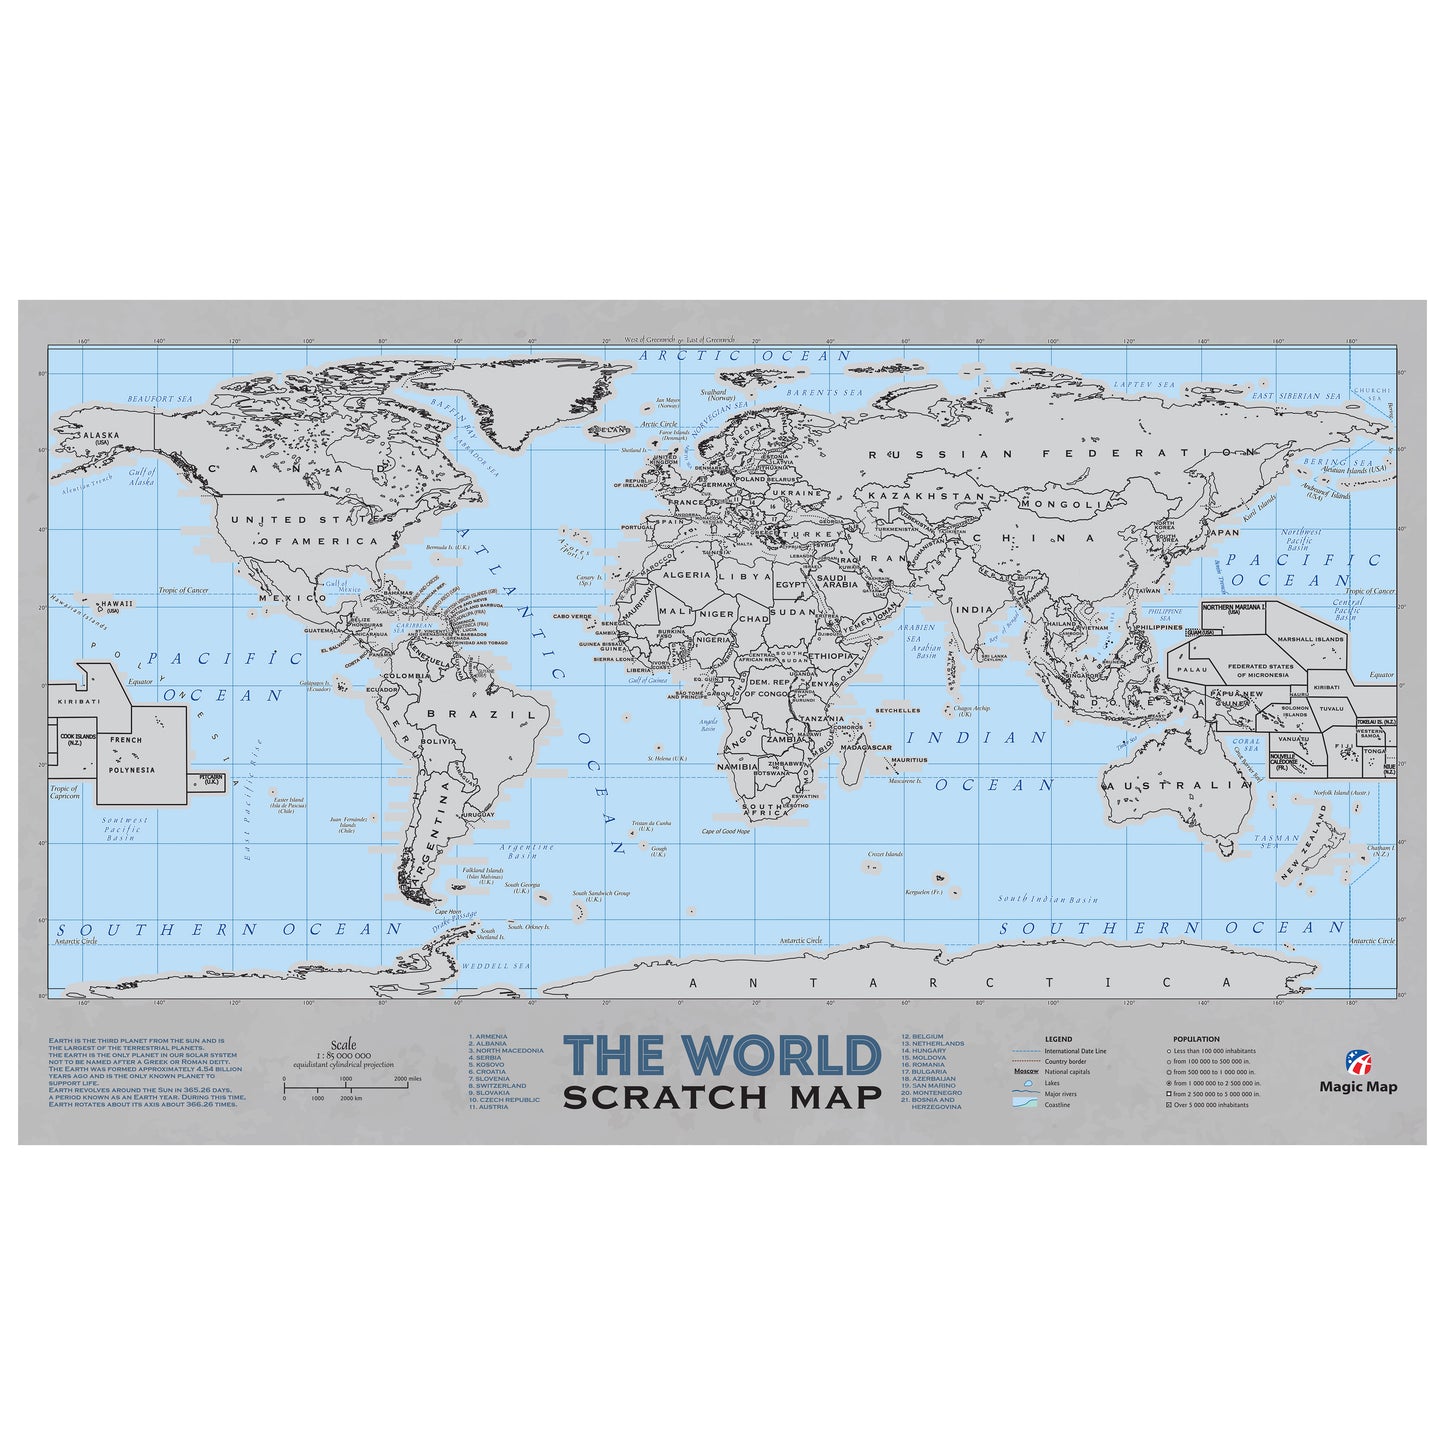 The World scratch map